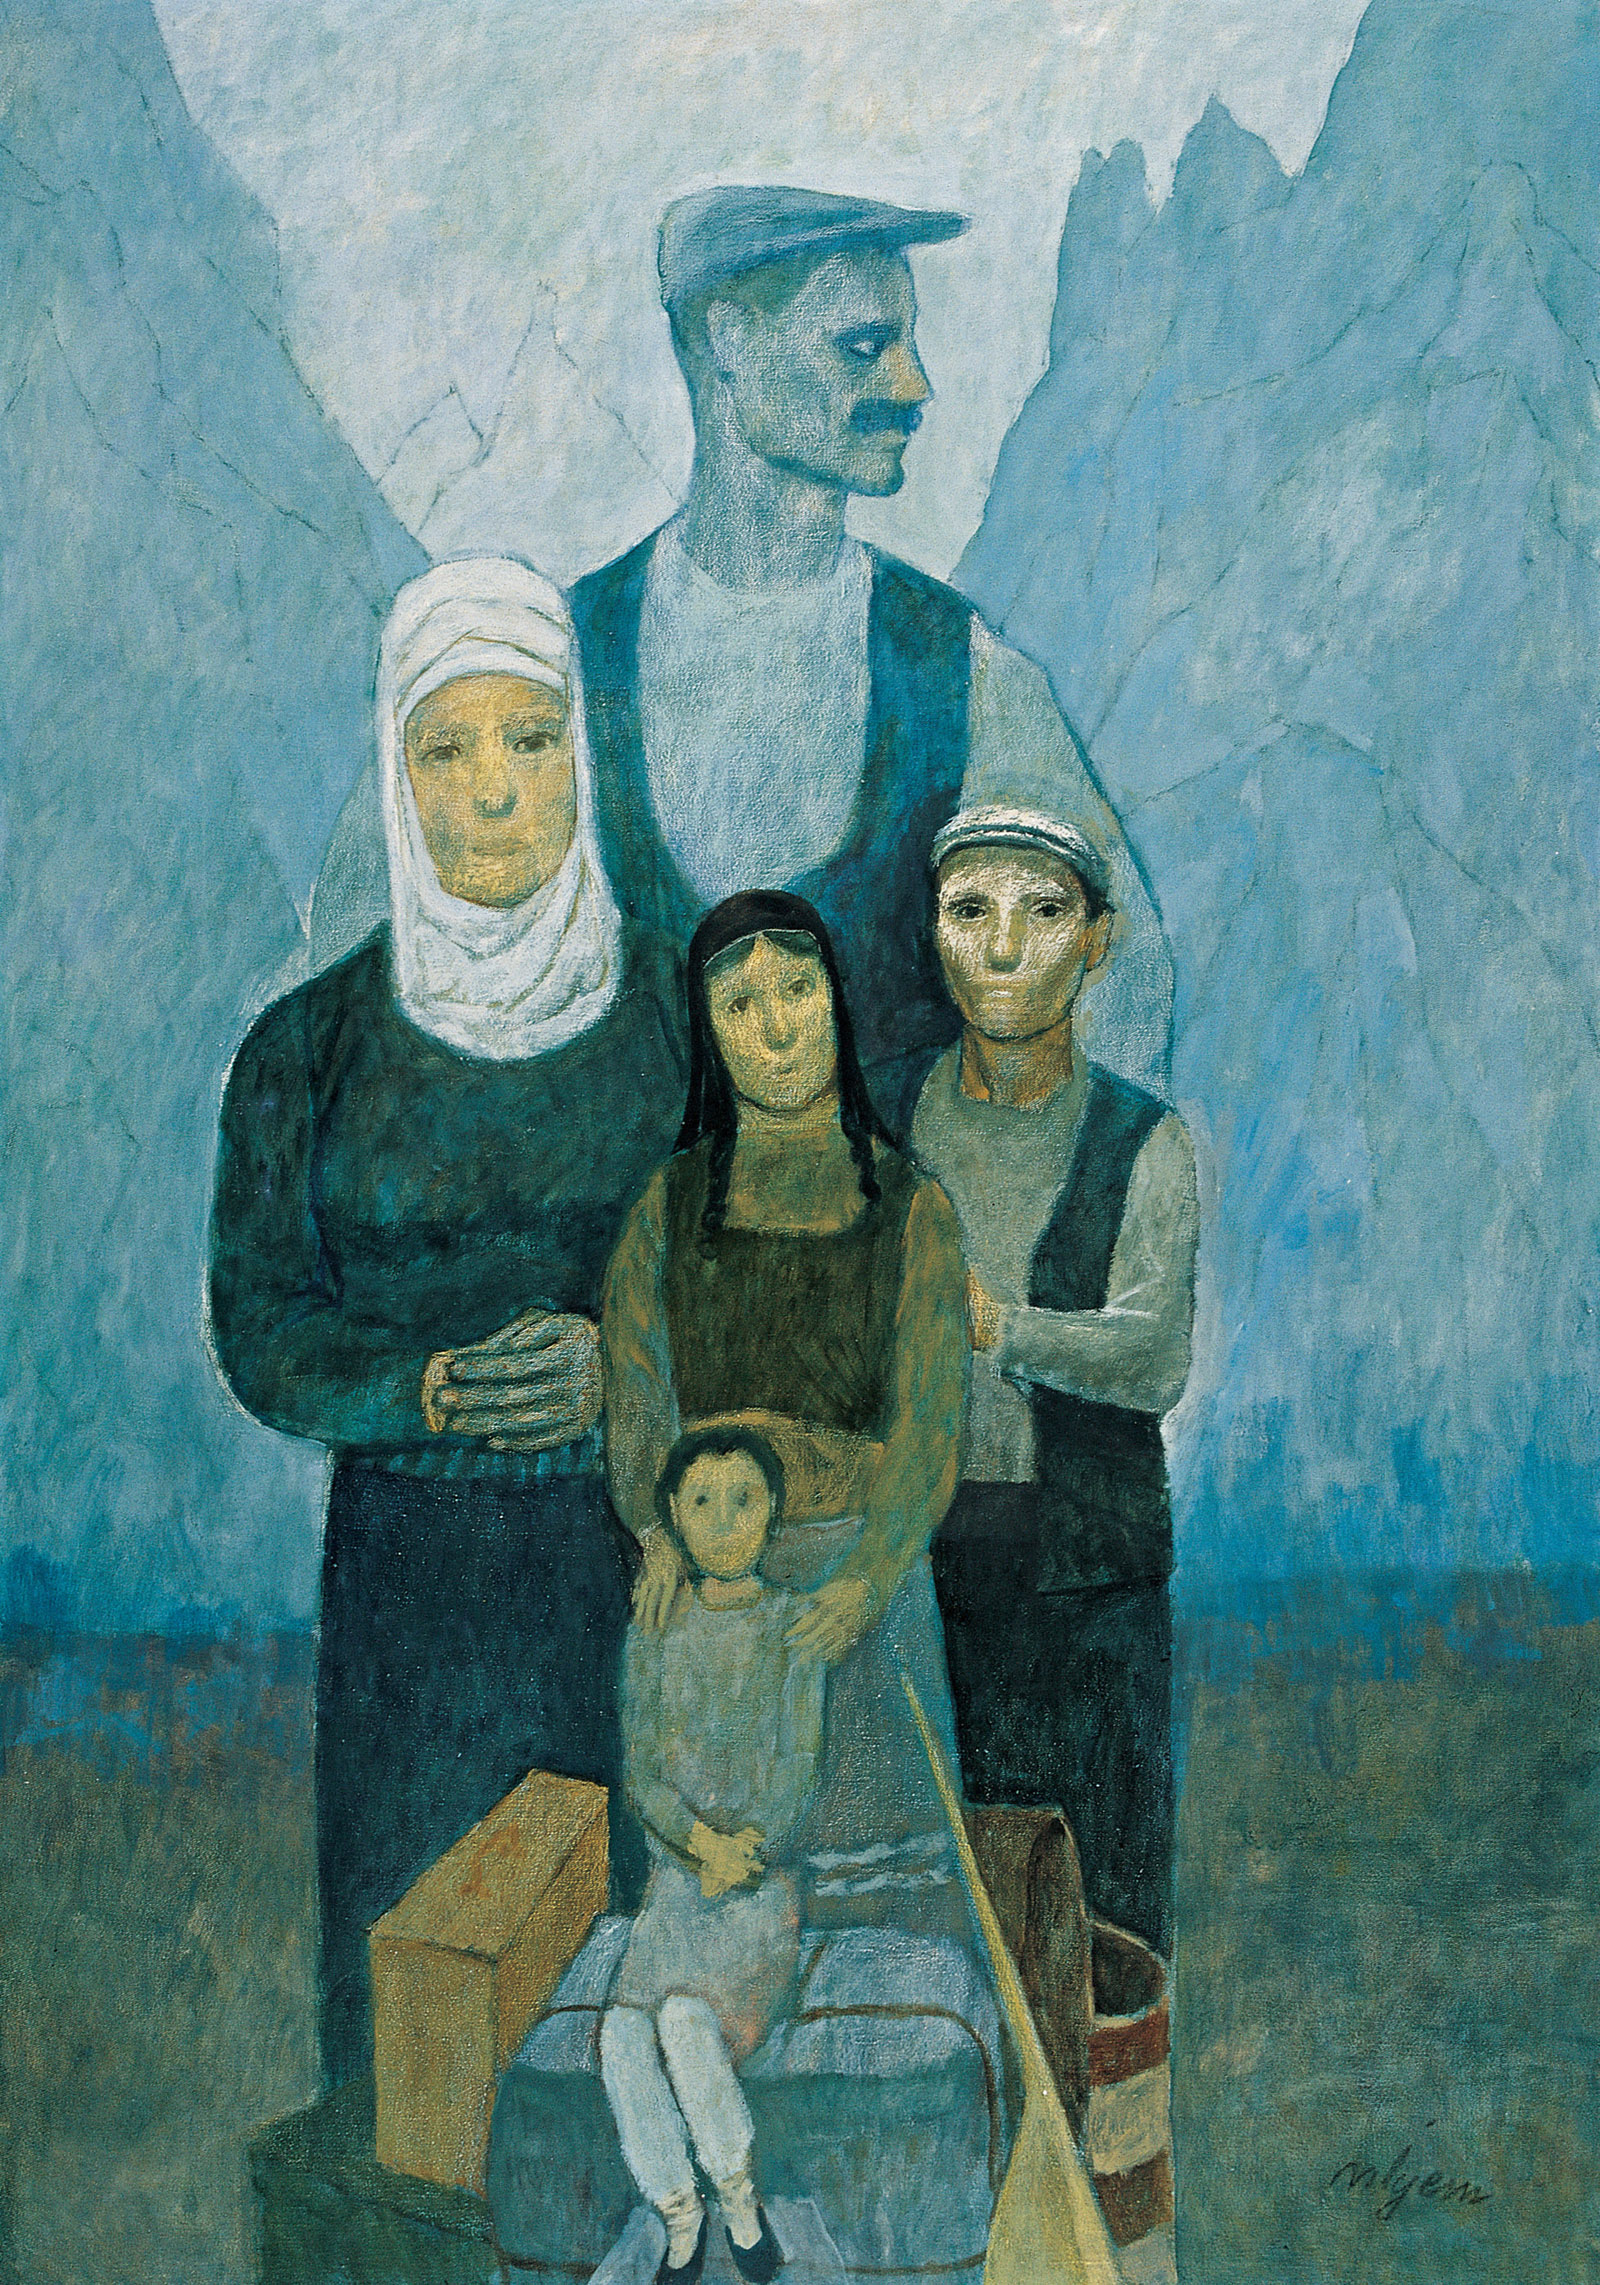 Göç Yolunda Aile / A Family on the Way of Migration - s1137-005